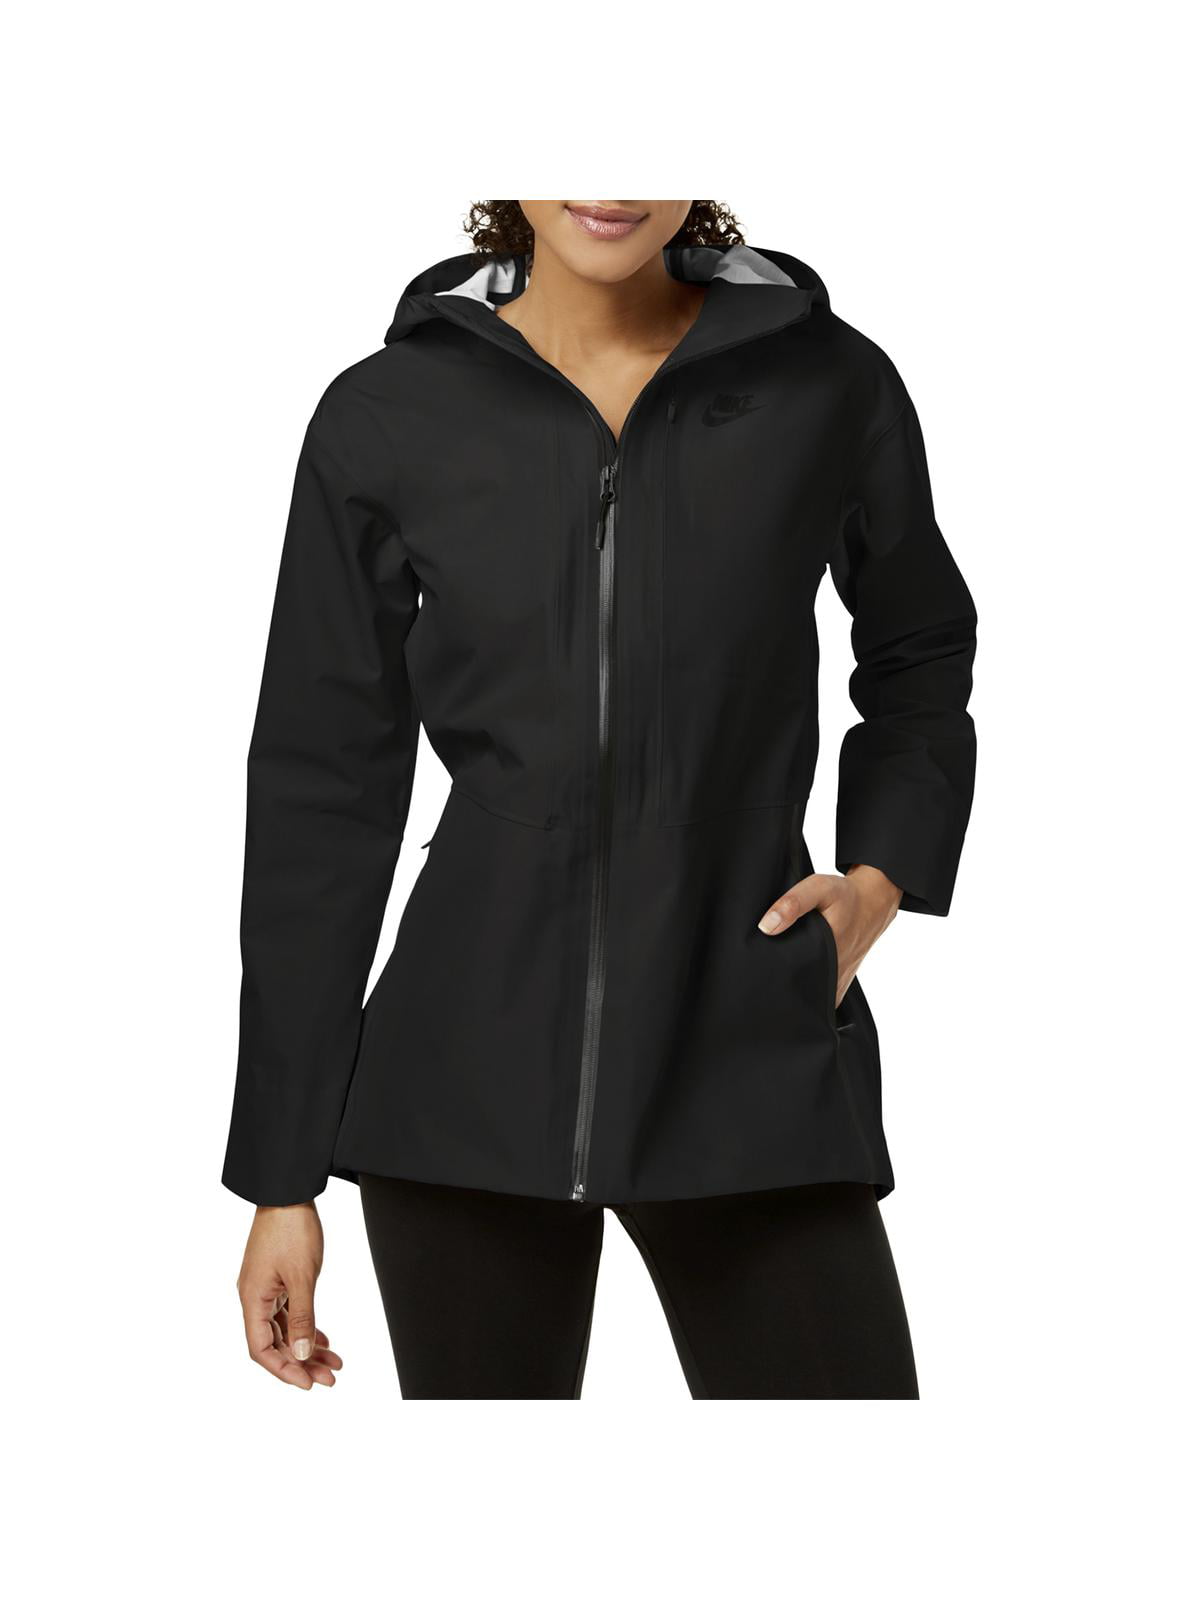 Nike Womens Winter Warm Raincoat 